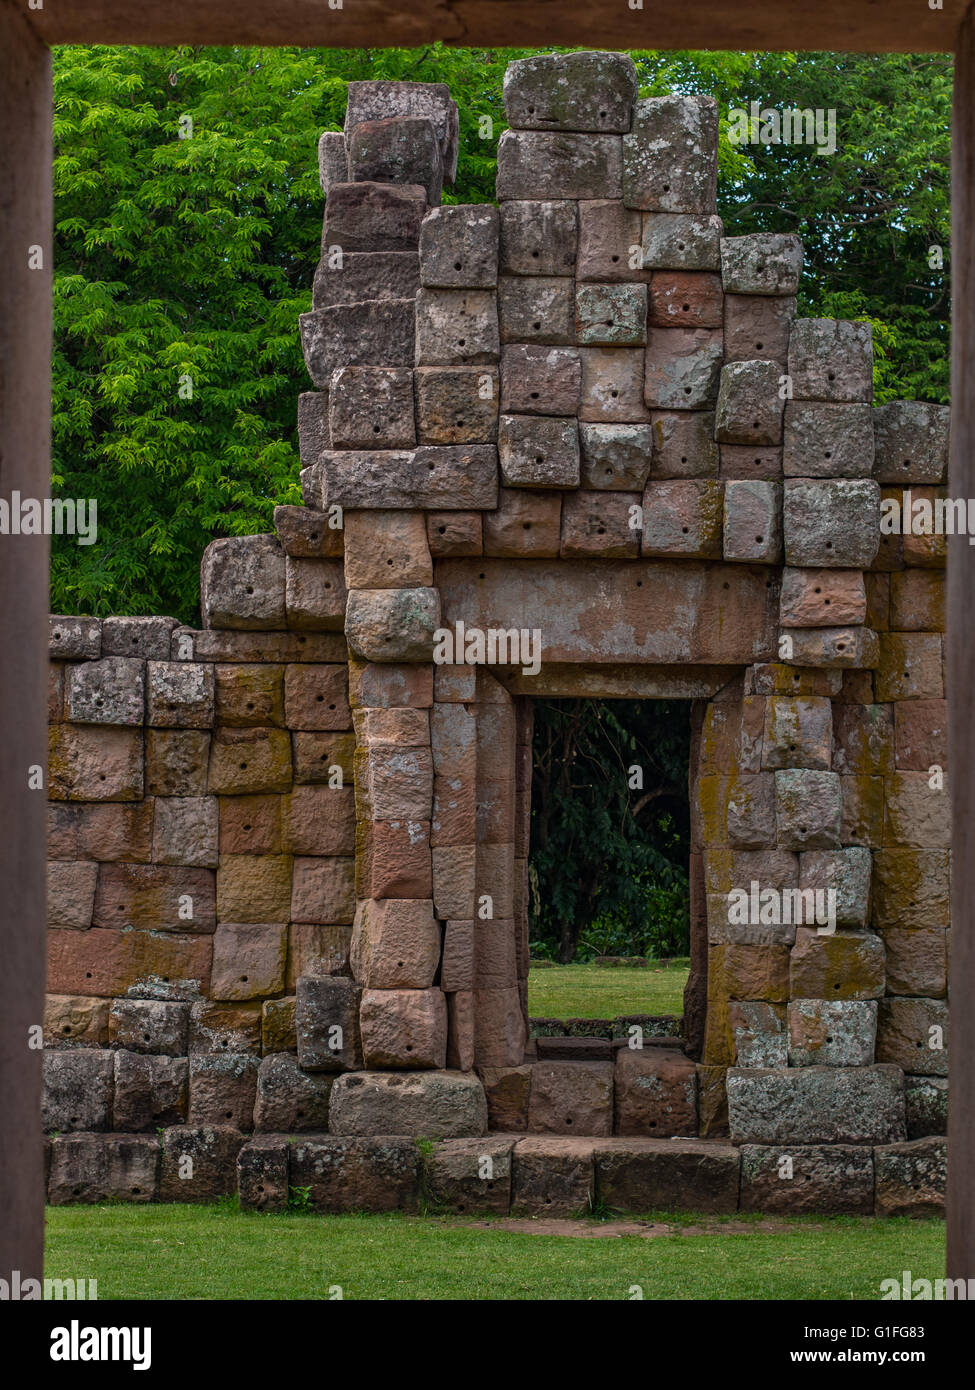 Phanom Rung Temple in  Buriram,Thailand, Stock Photo